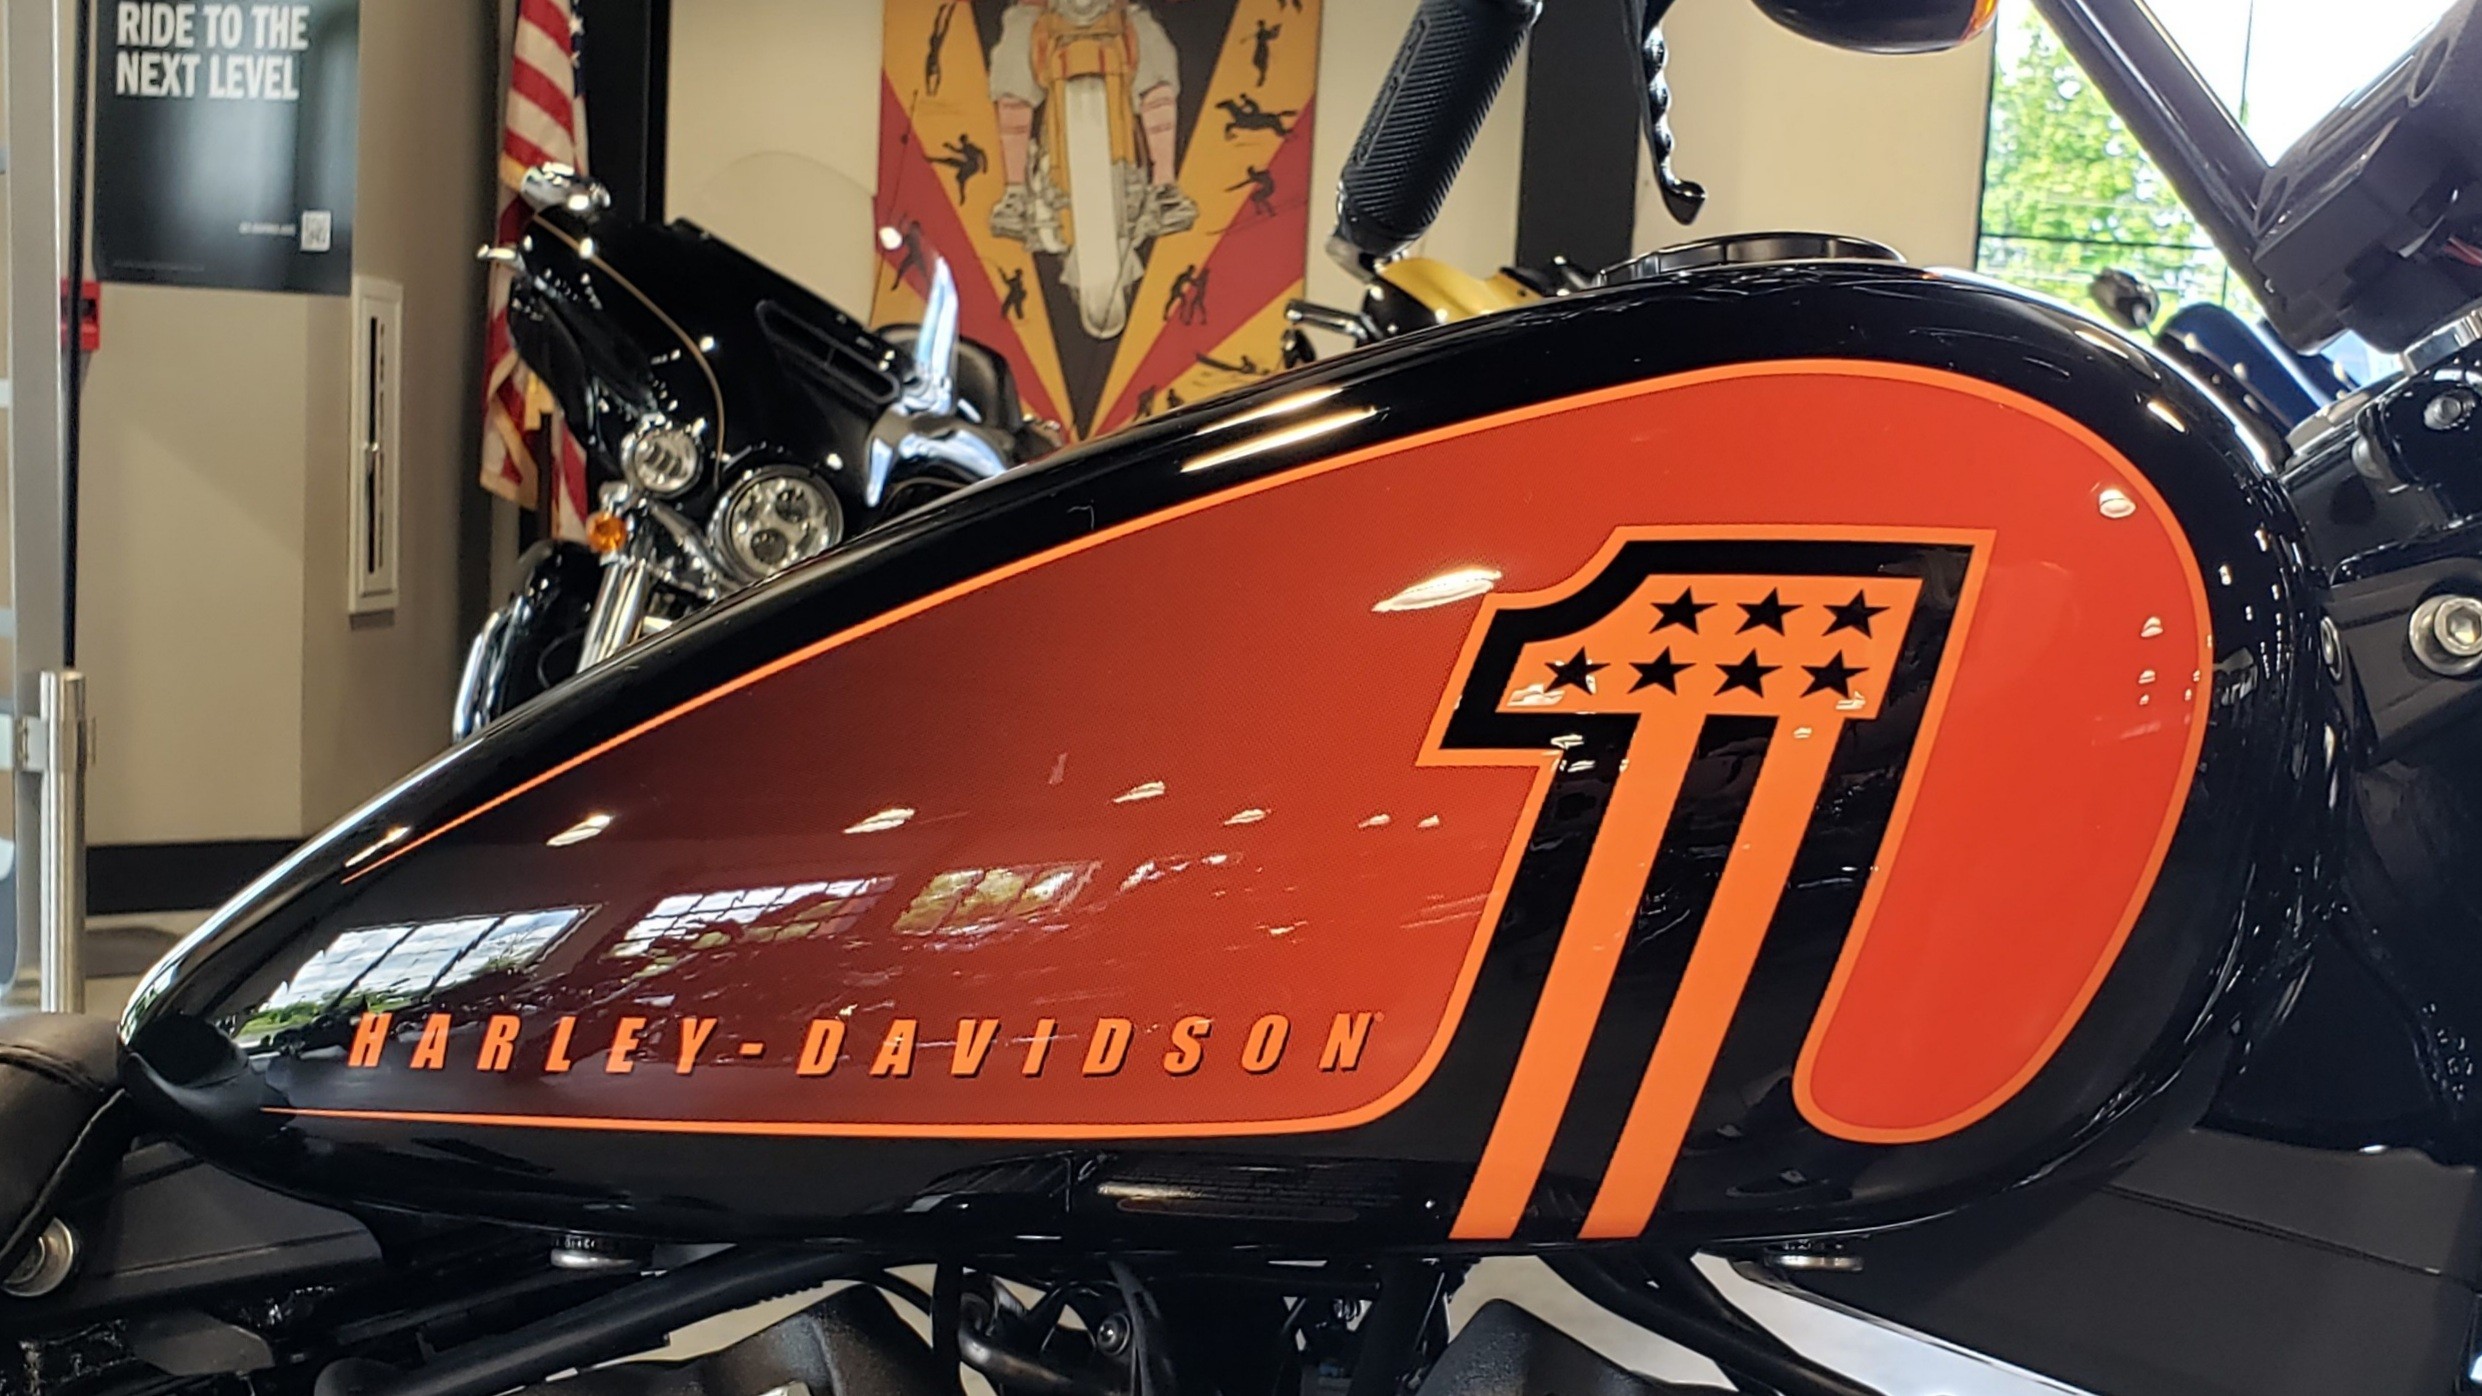 2021 Harley-Davidson Cruiser Street Bob 114 at Keystone Harley-Davidson